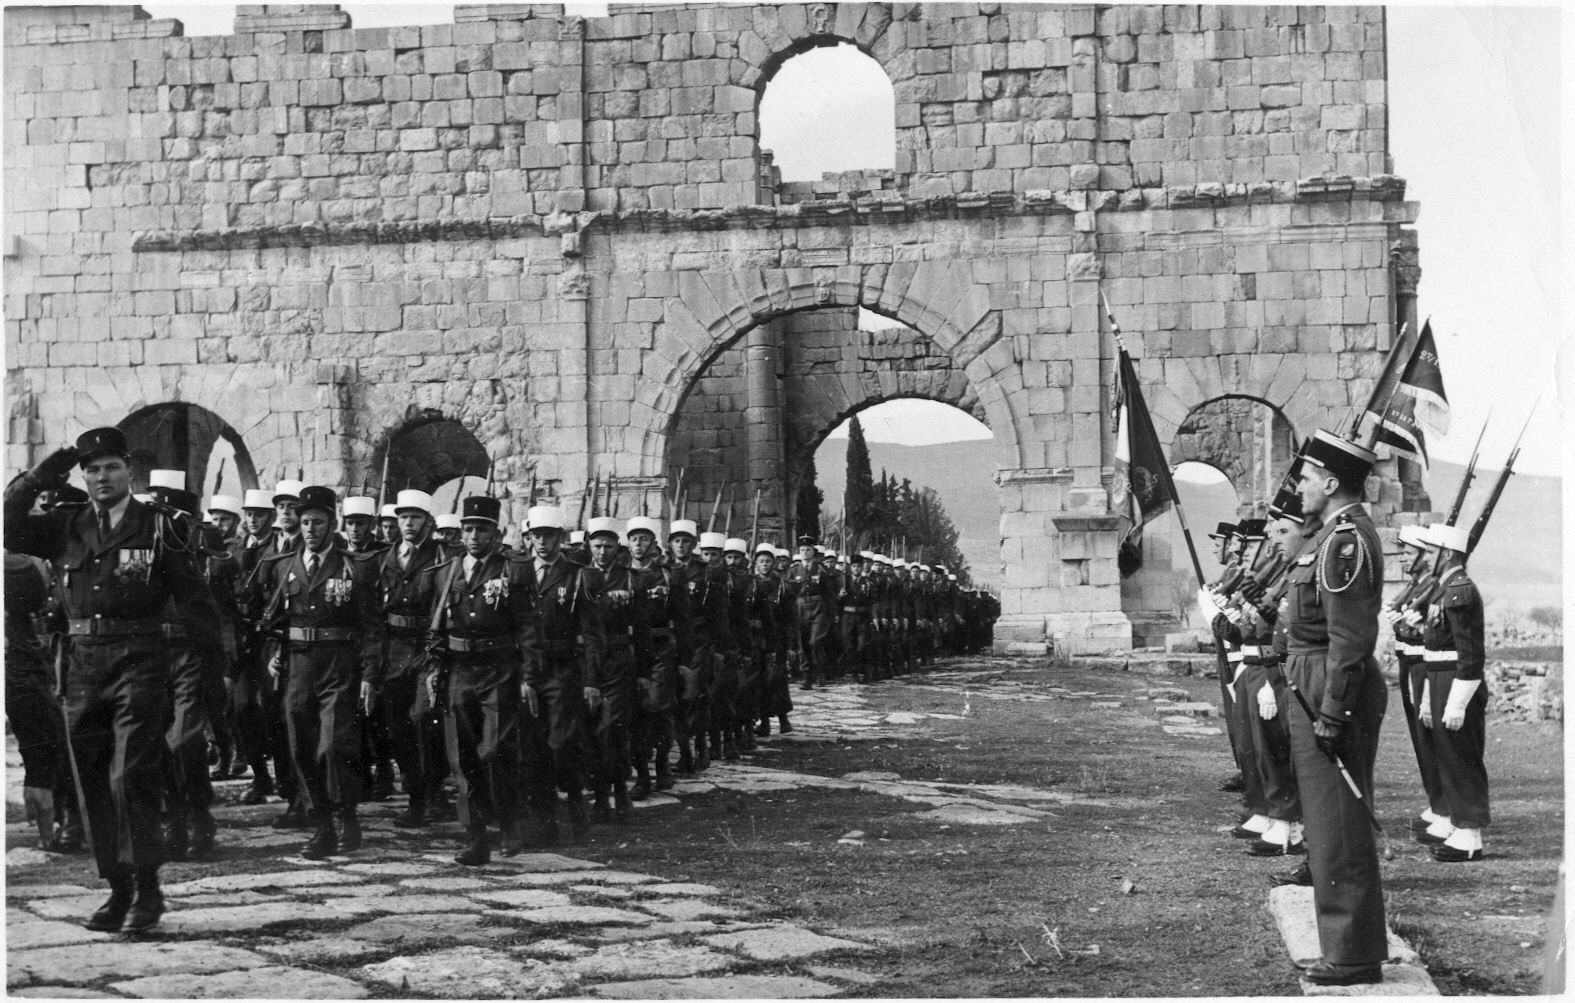 The 13th Demi-Brigade of the Foreign Legion parading through Roman ruins in Lambaesis, Algeria, 1958 (Wikipedia)